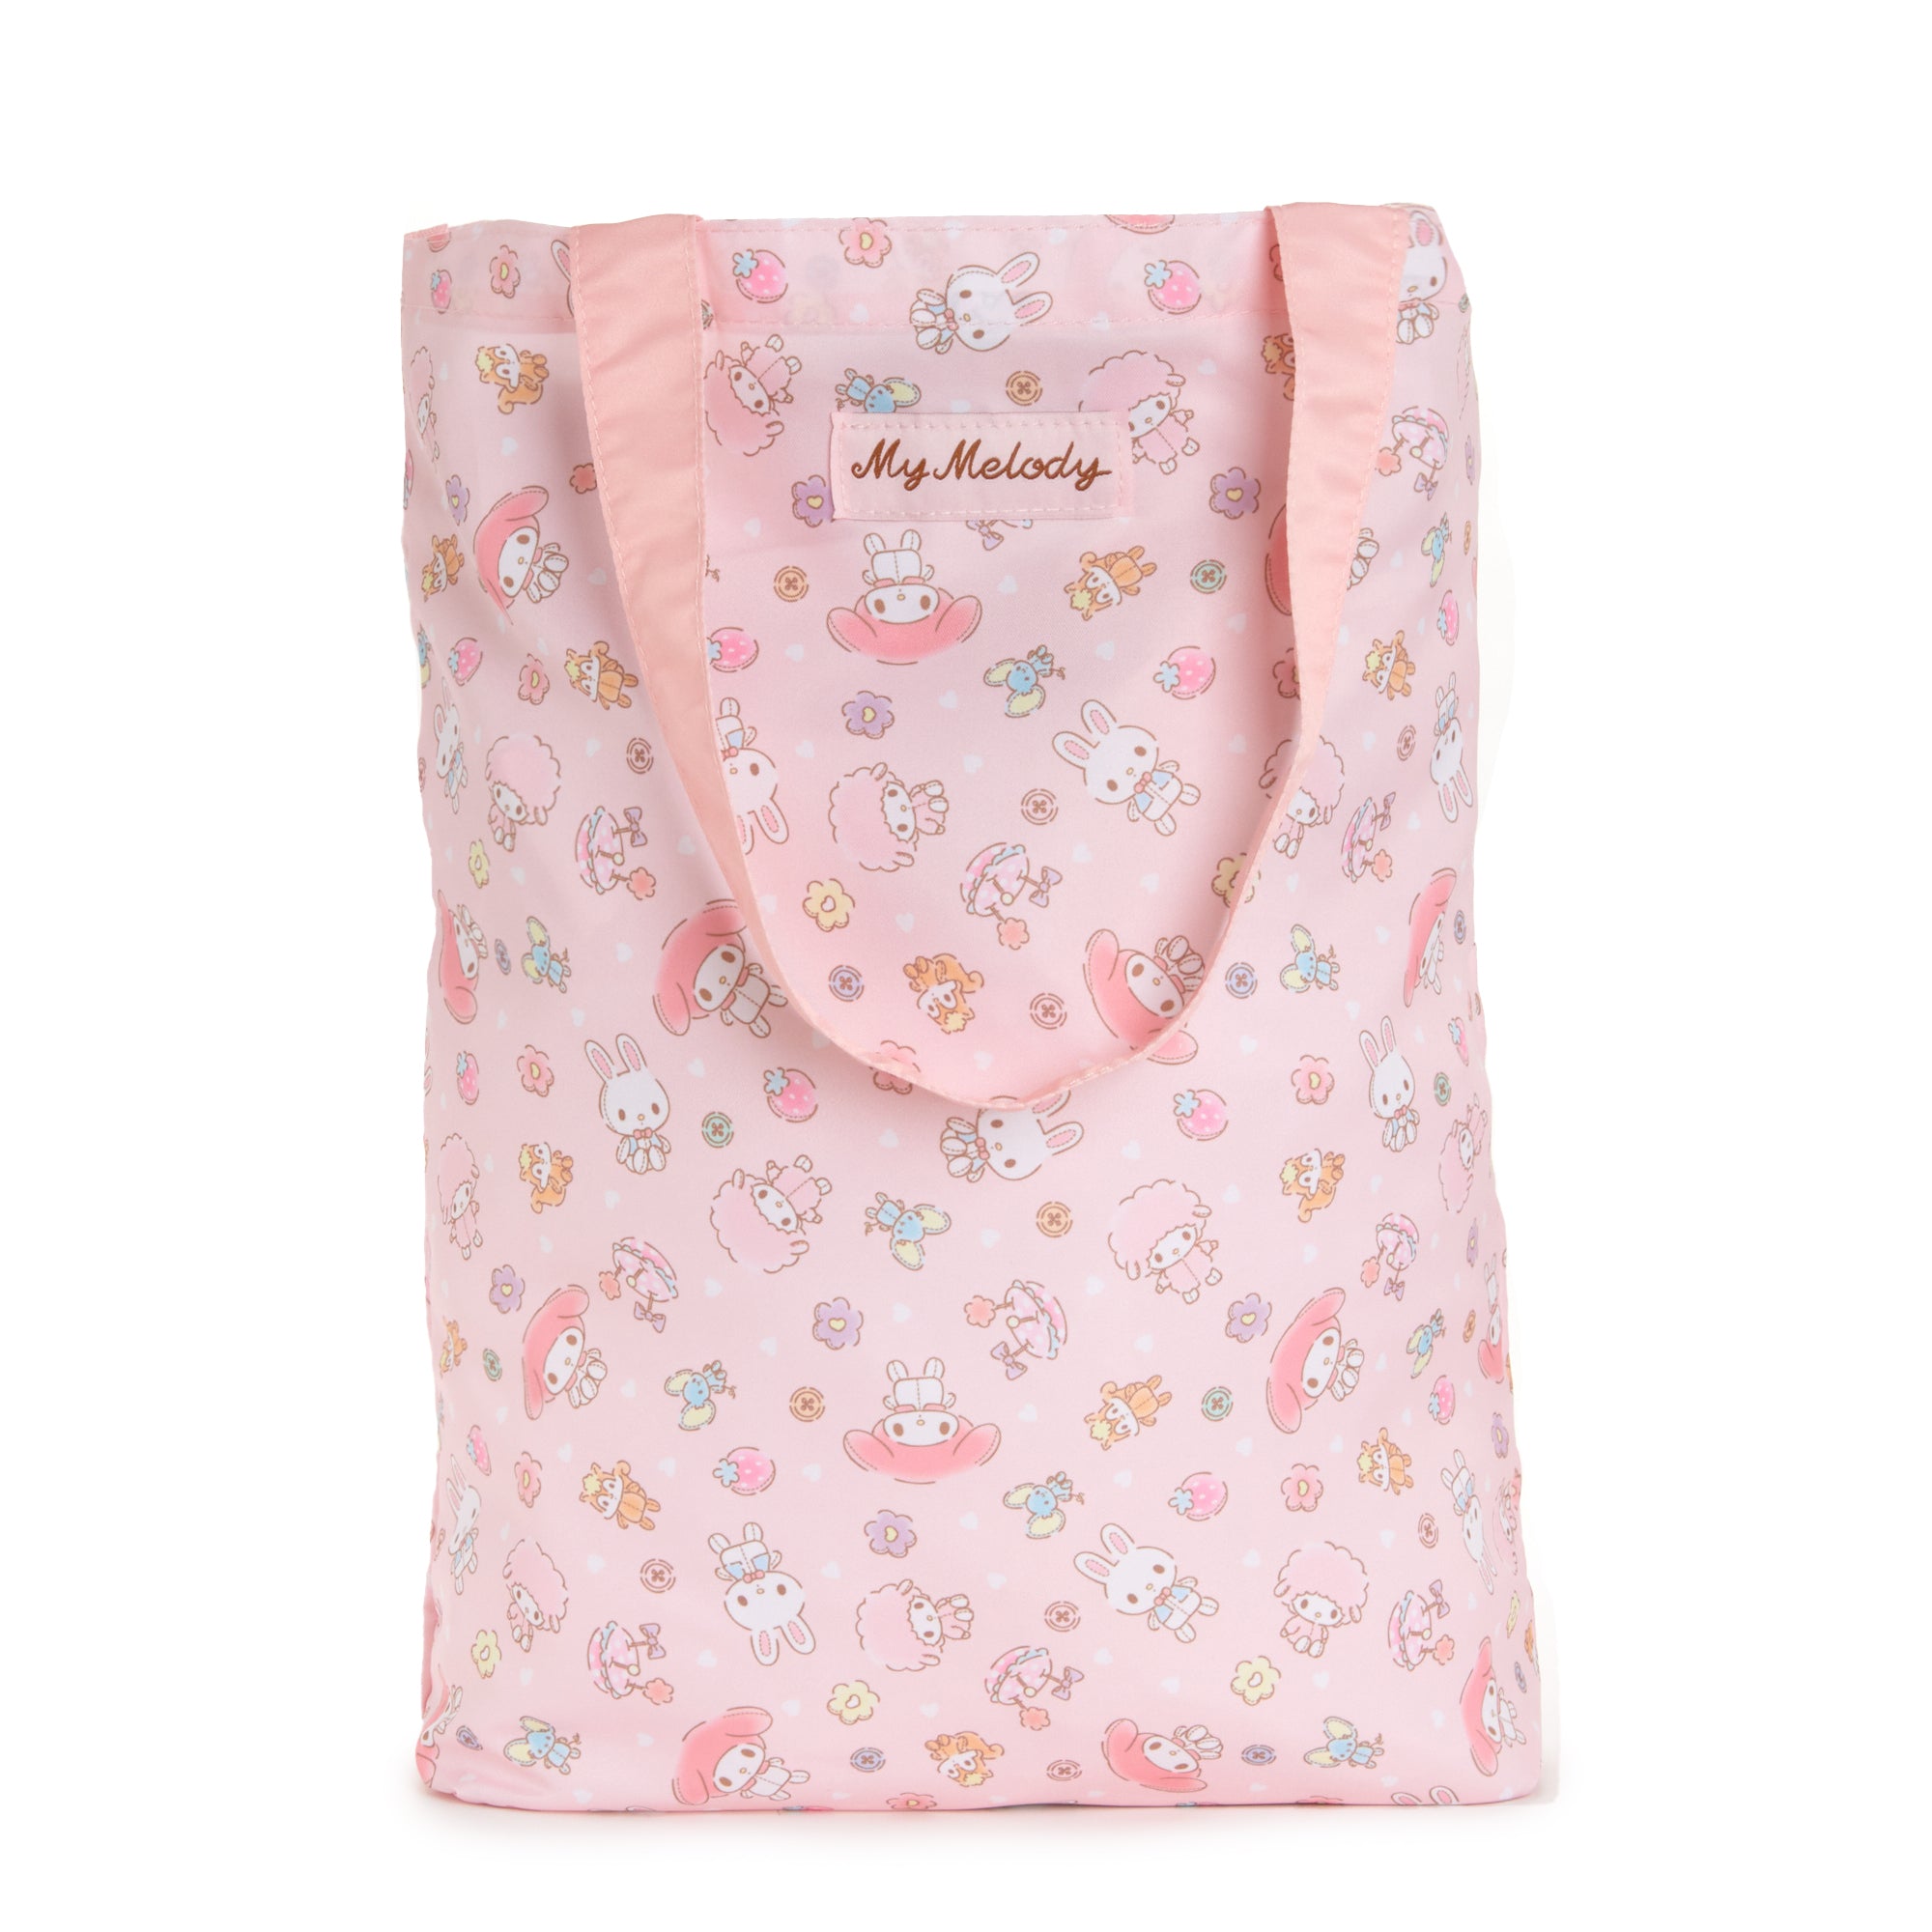 Sleep Kuromi My Melody Cinnamoroll Lunch Box Bag Storage Case Insulated  Handbag